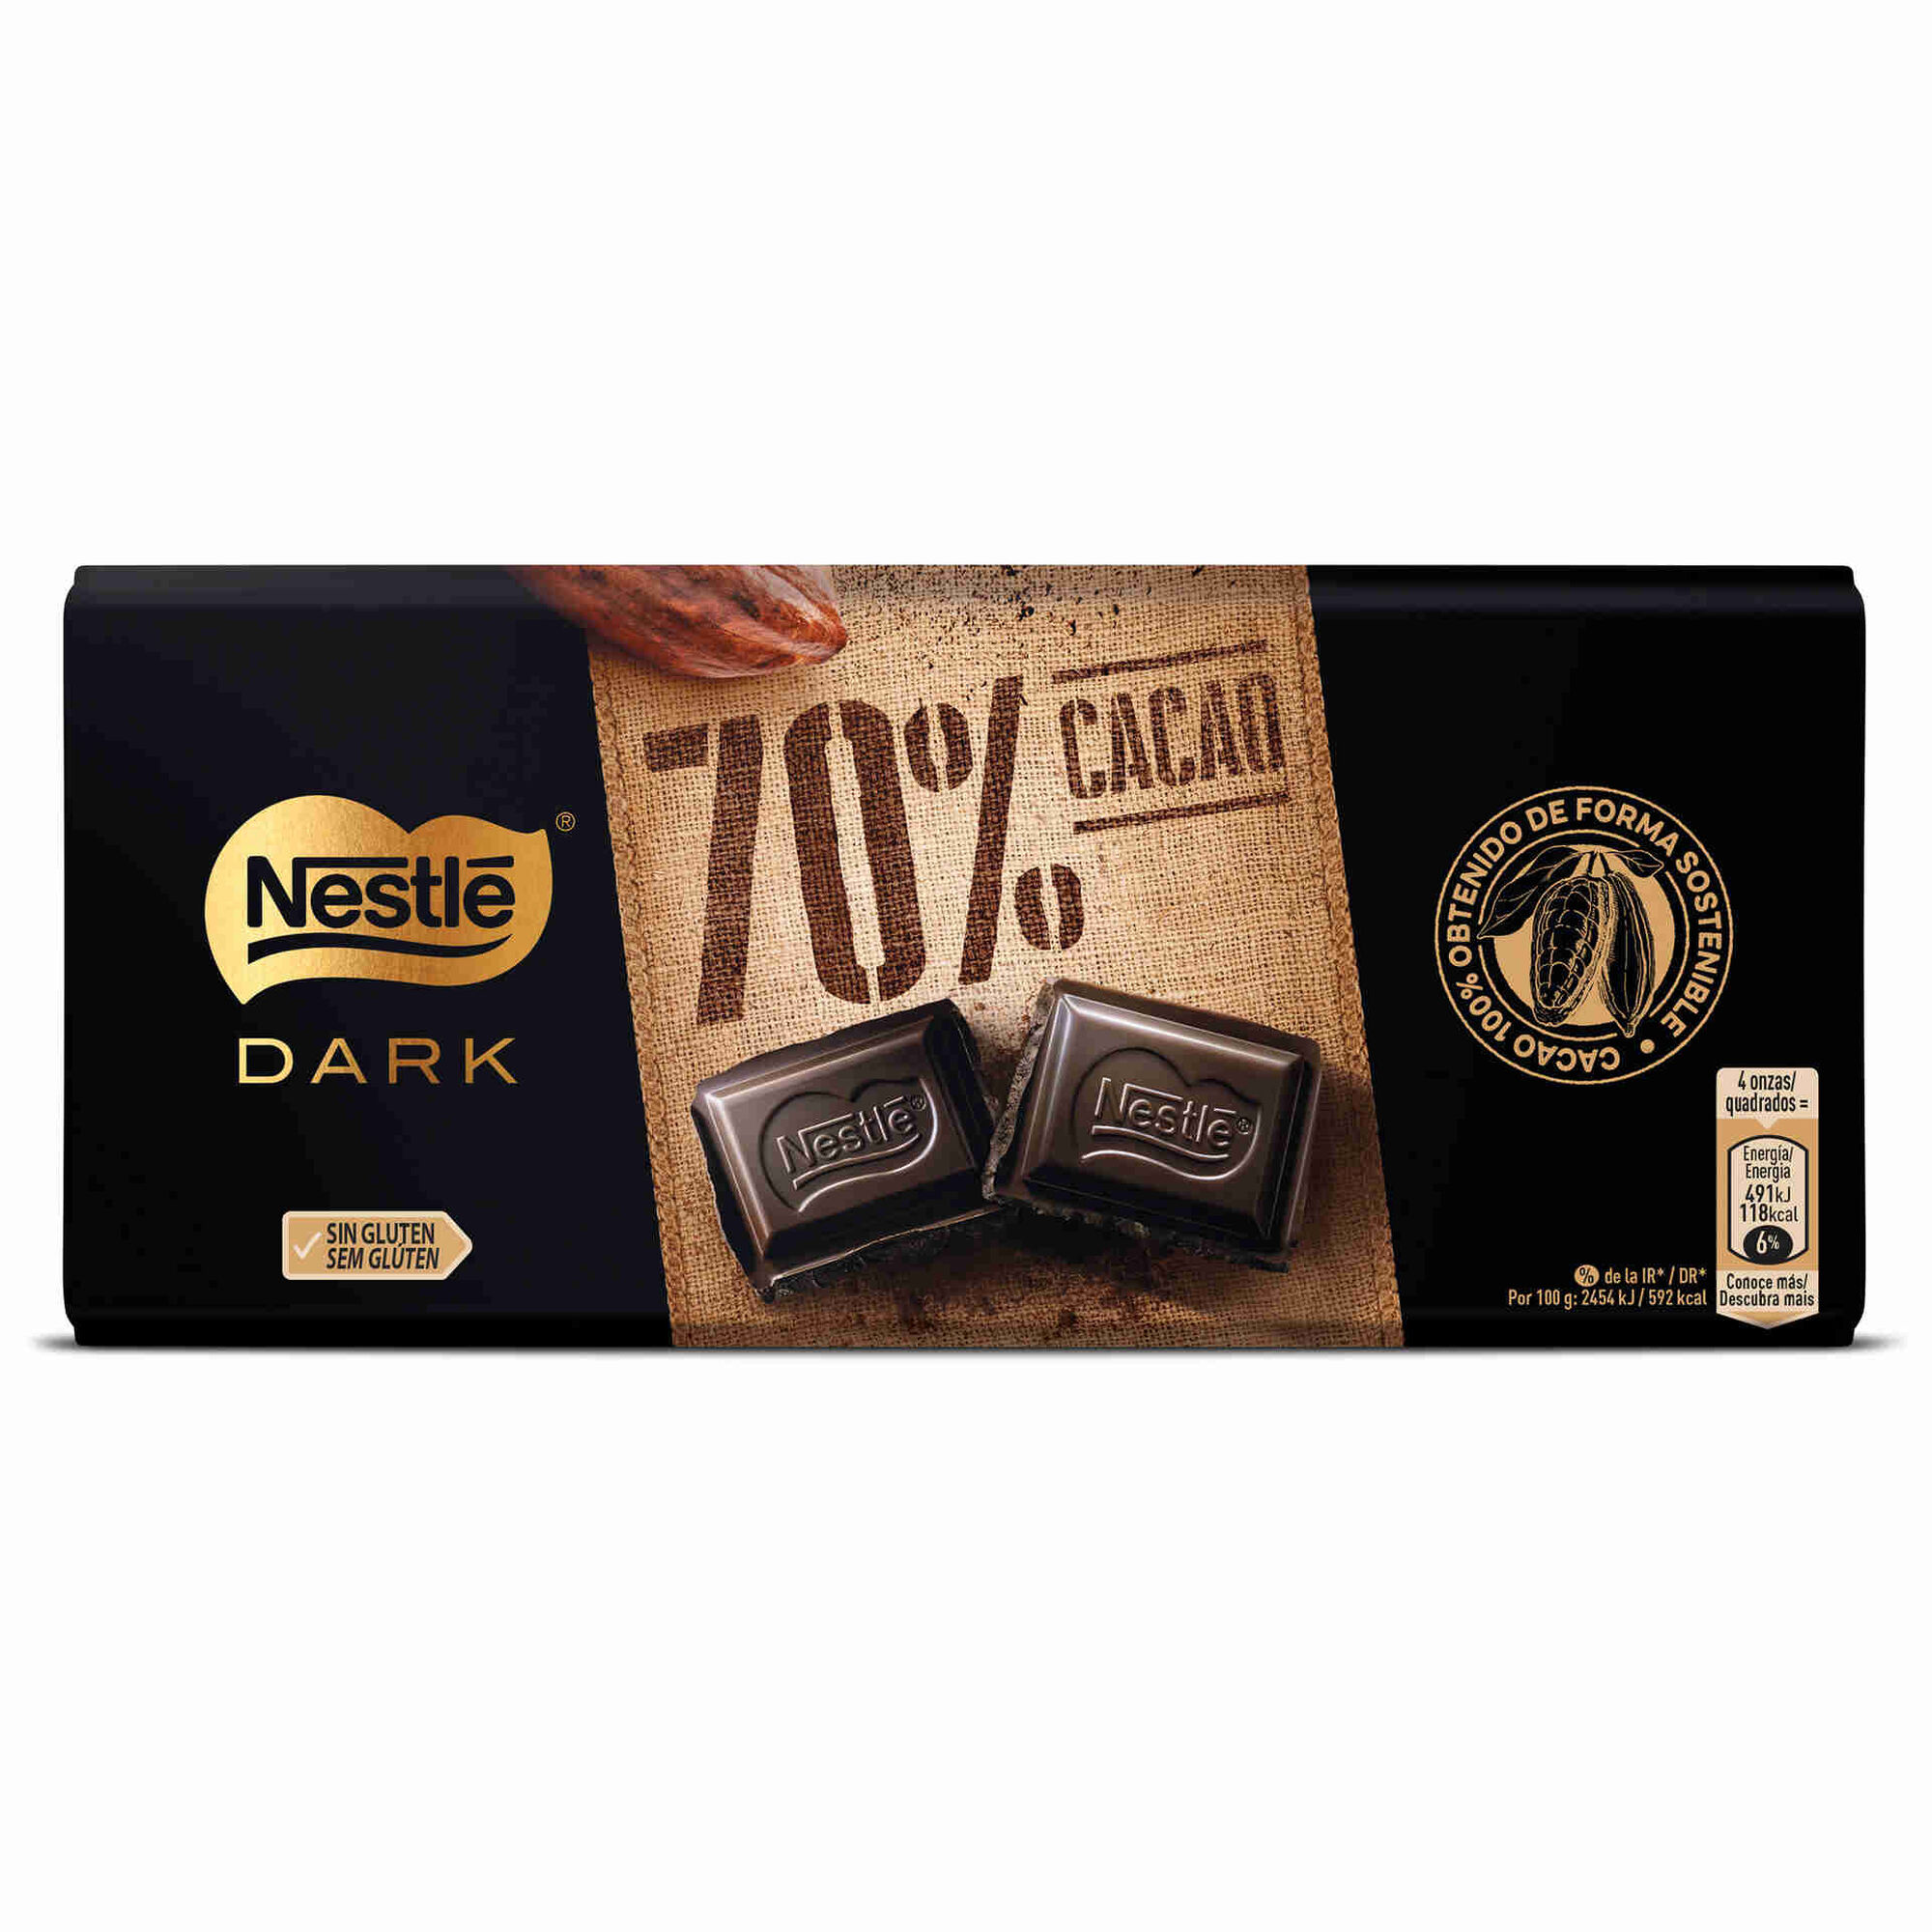 Nestlé Dark Tablete de Chocolate Preto Extrafino 70% Cacau sem Glúten